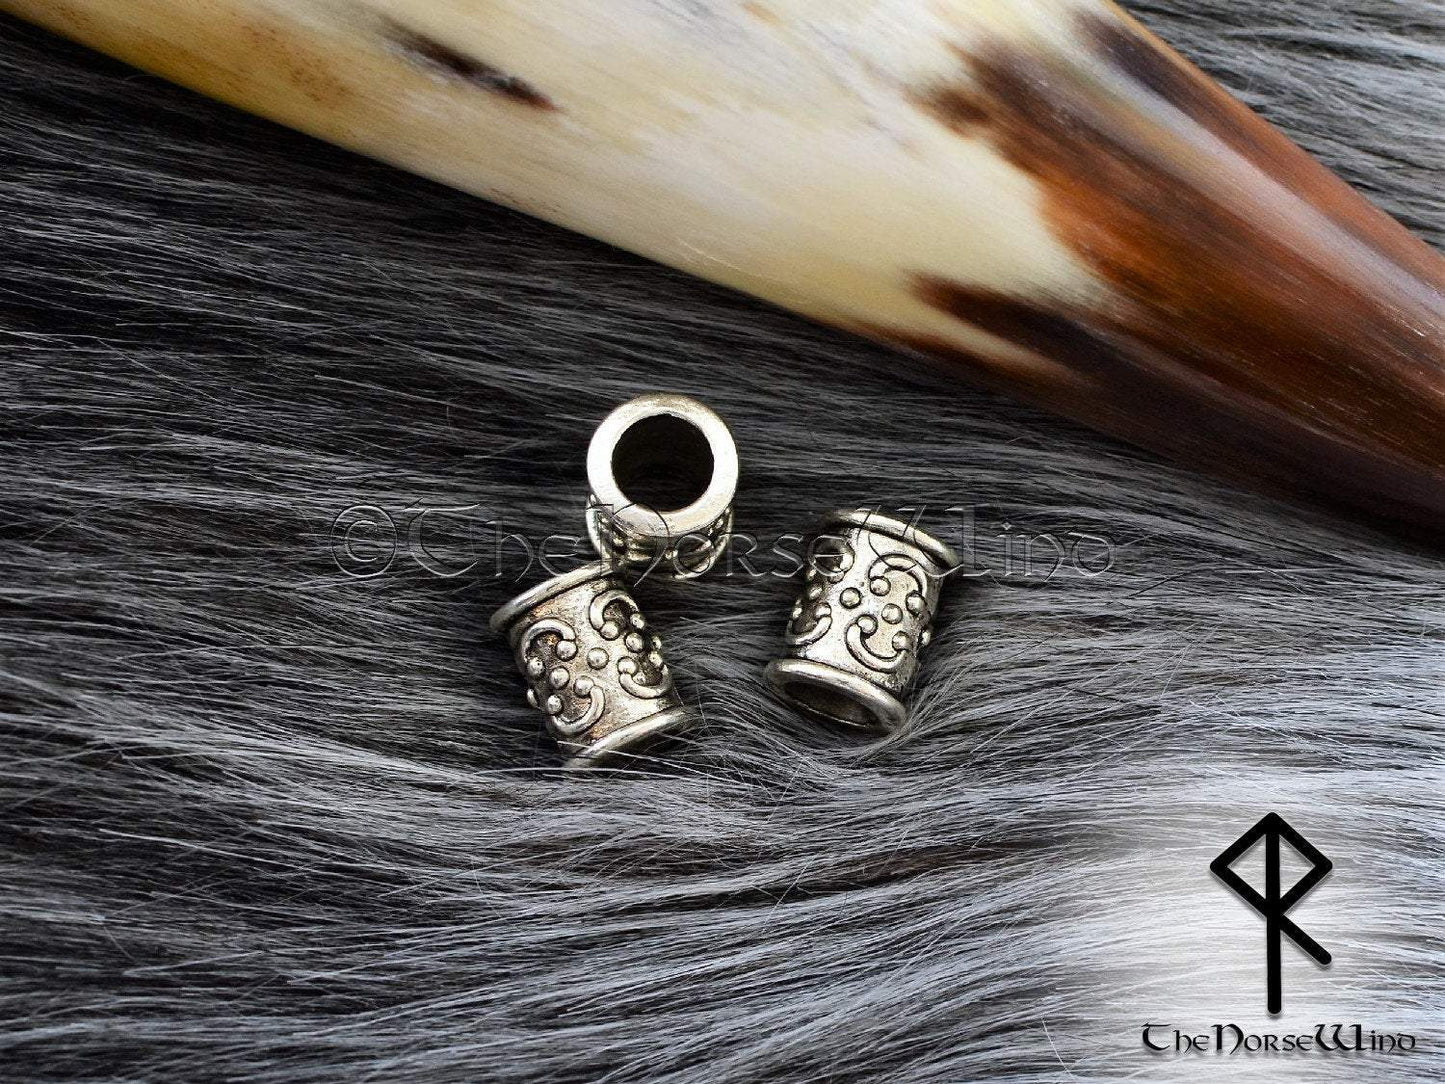 Viking Beard Beads Set of 4 Hair Rings #2 TheNorseWind